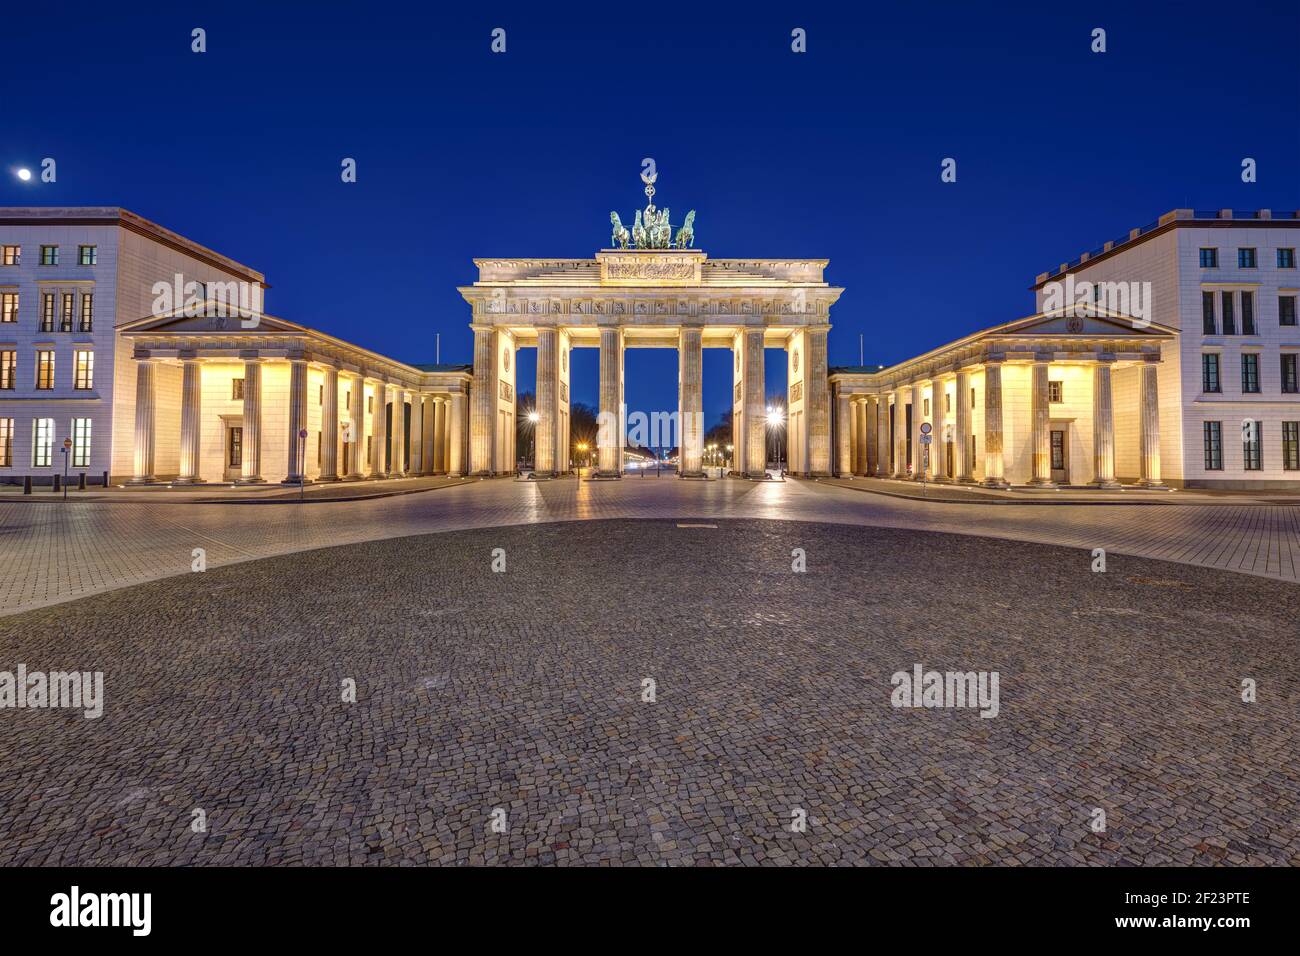 Panorama des berühmten beleuchteten Brandenburger Tors in Berlin bei Nacht ohne Menschen Stockfoto